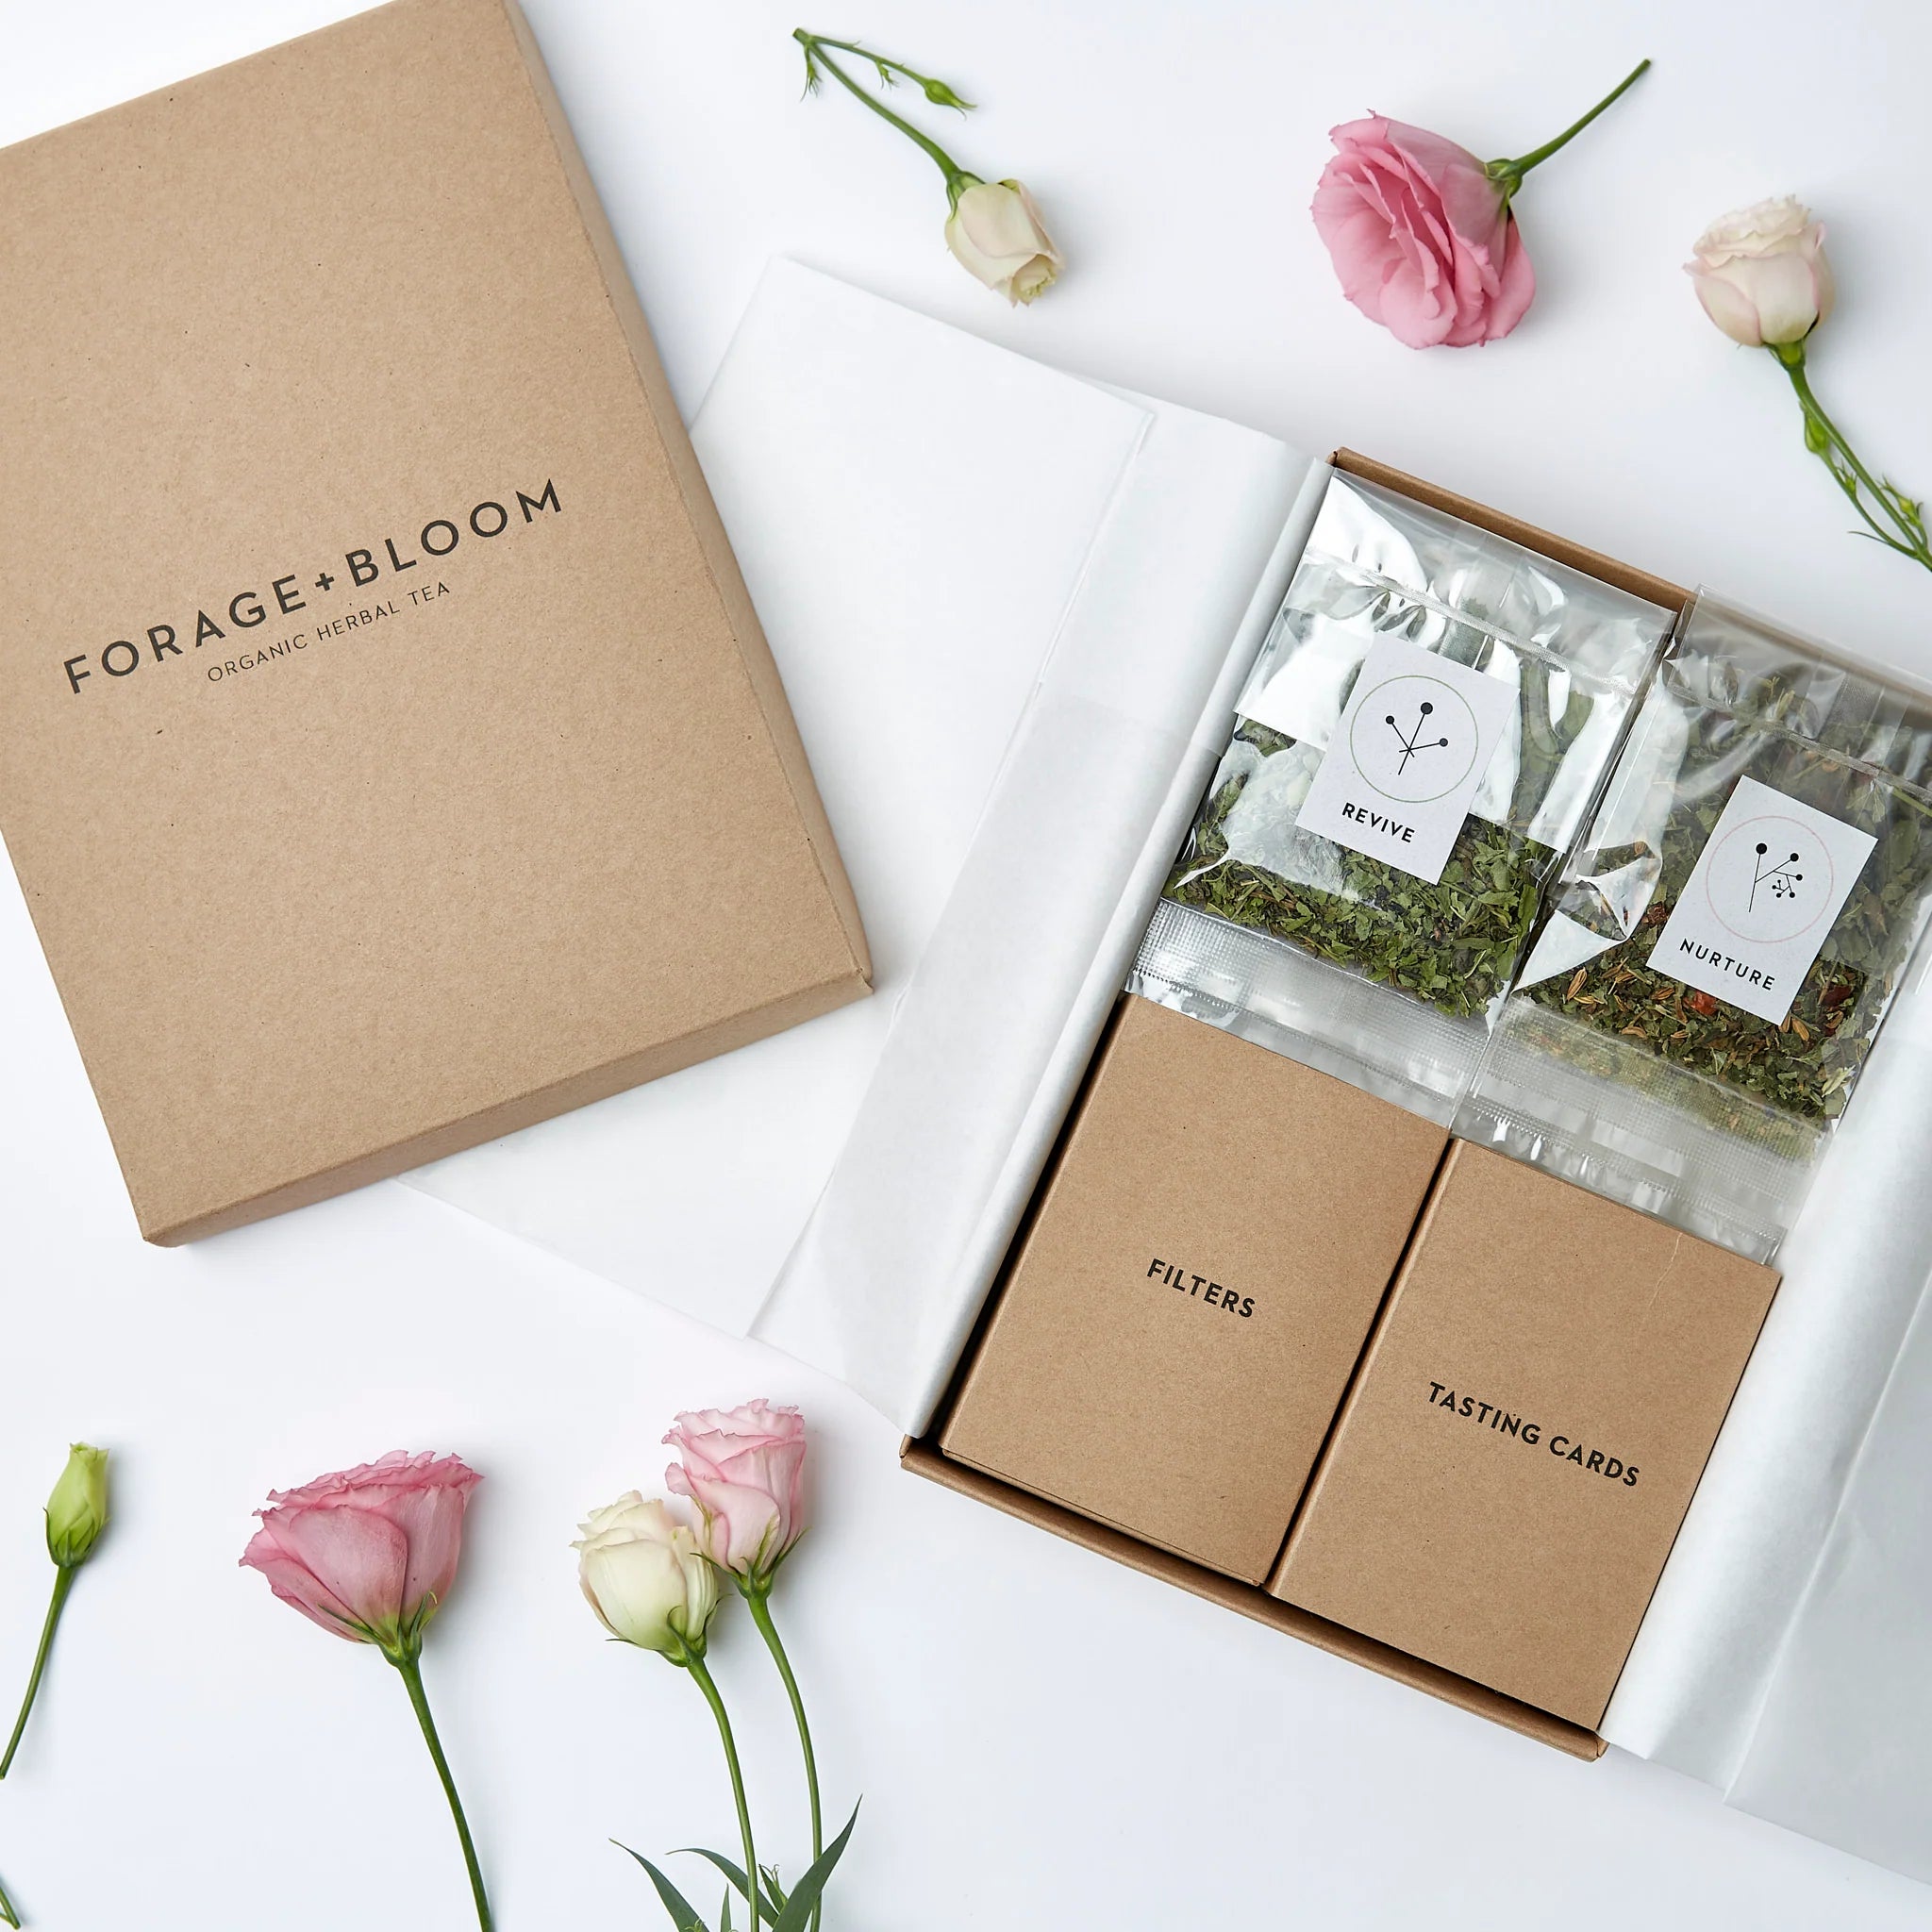 Elegant tea tasting set from Tea Testing Box Set by Forage + Bloom with organic herbal tea blends, accompanied by tasteful packaging and delicate flowers.